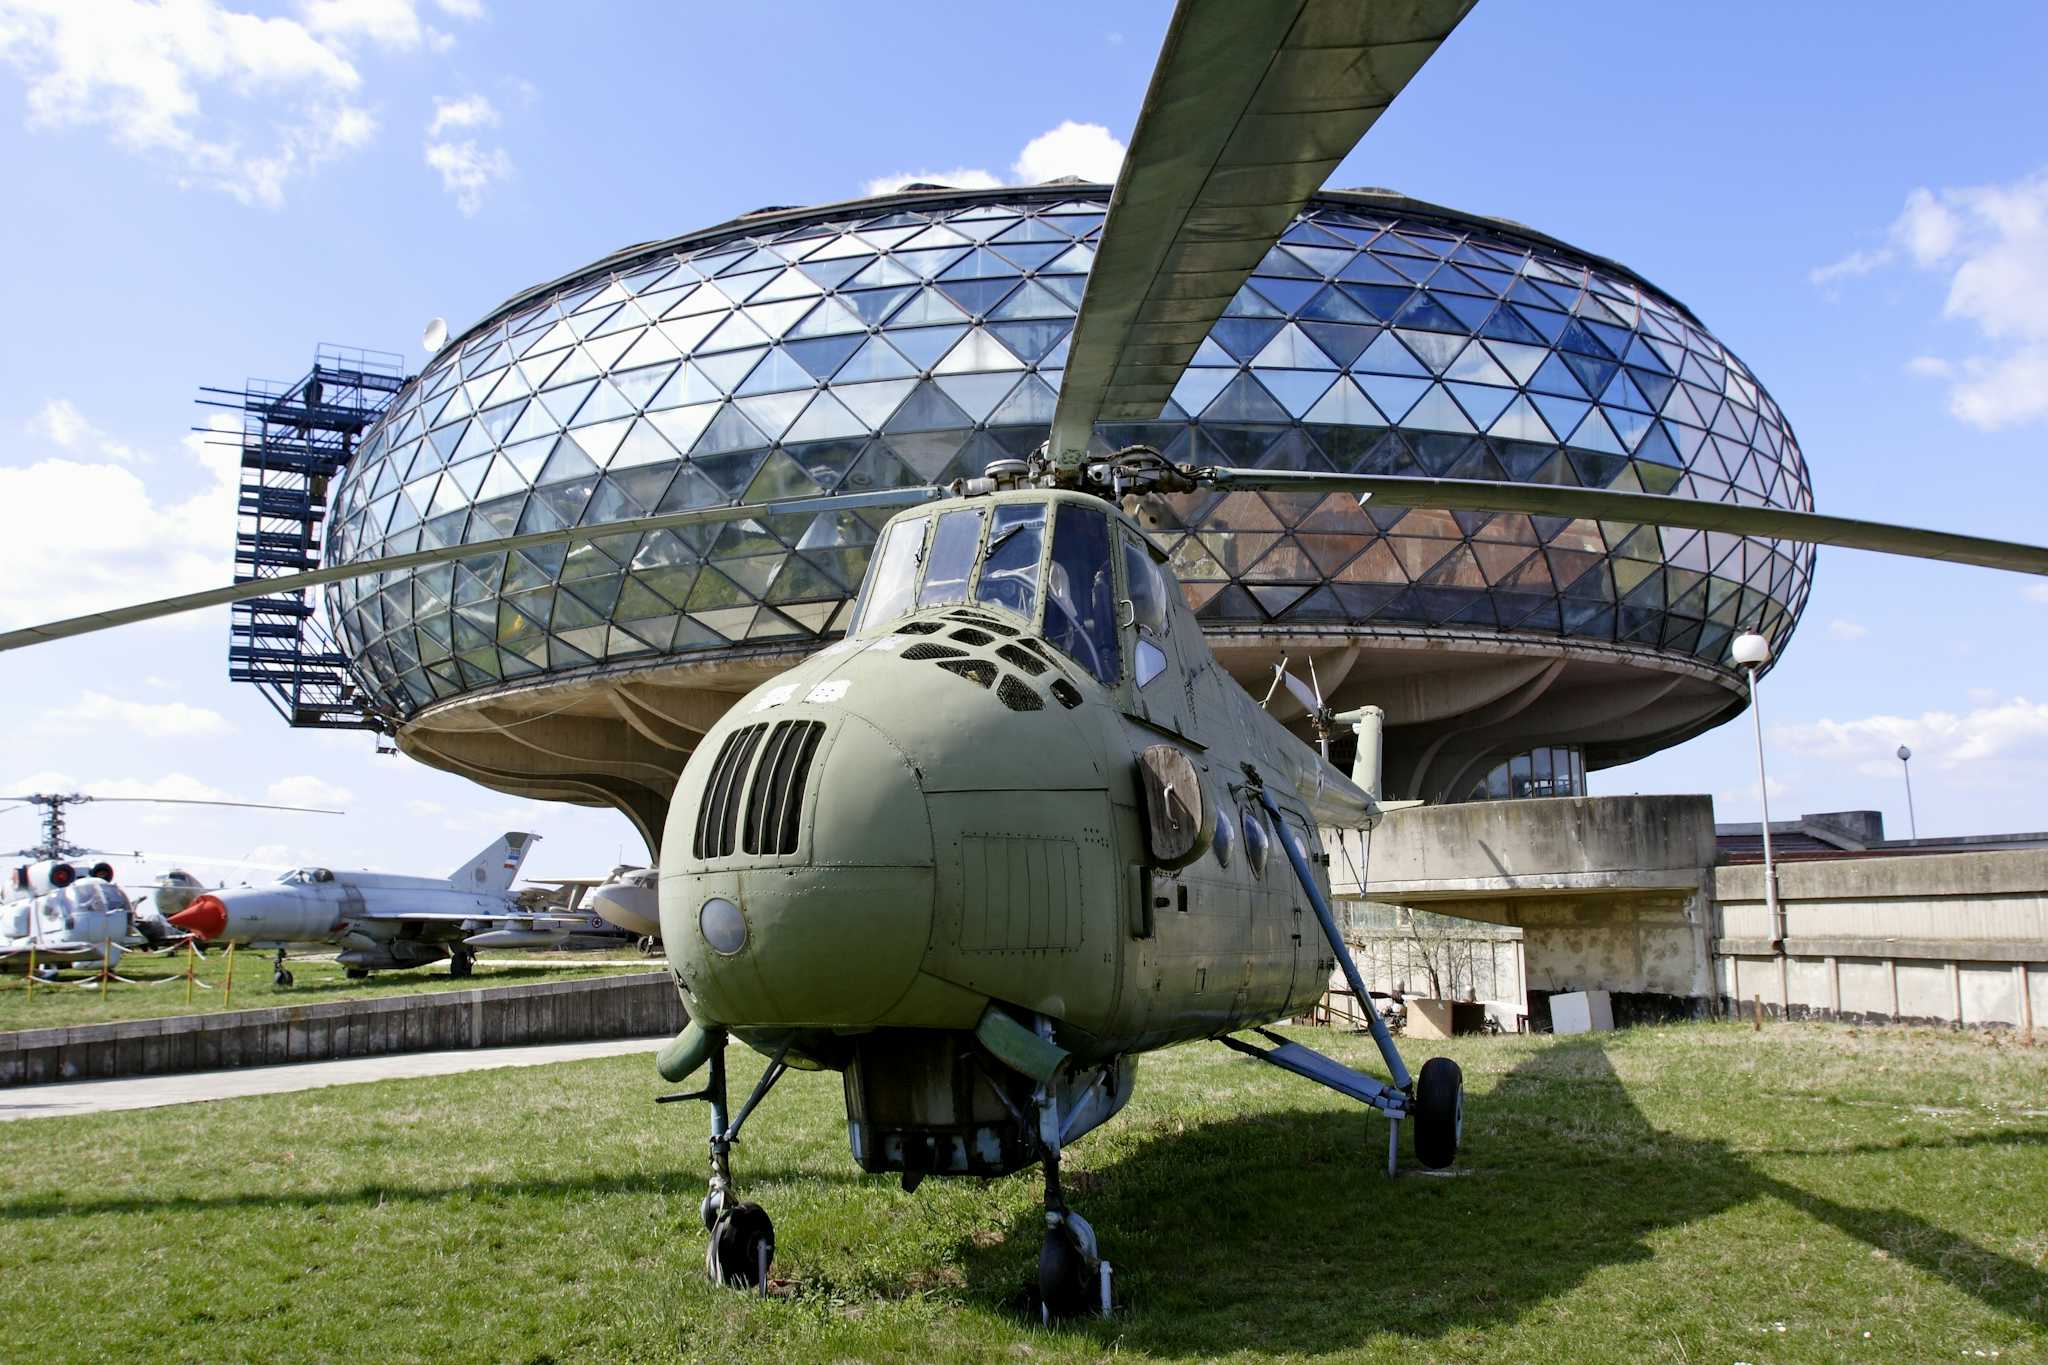 The Belgrade Aviation Museum